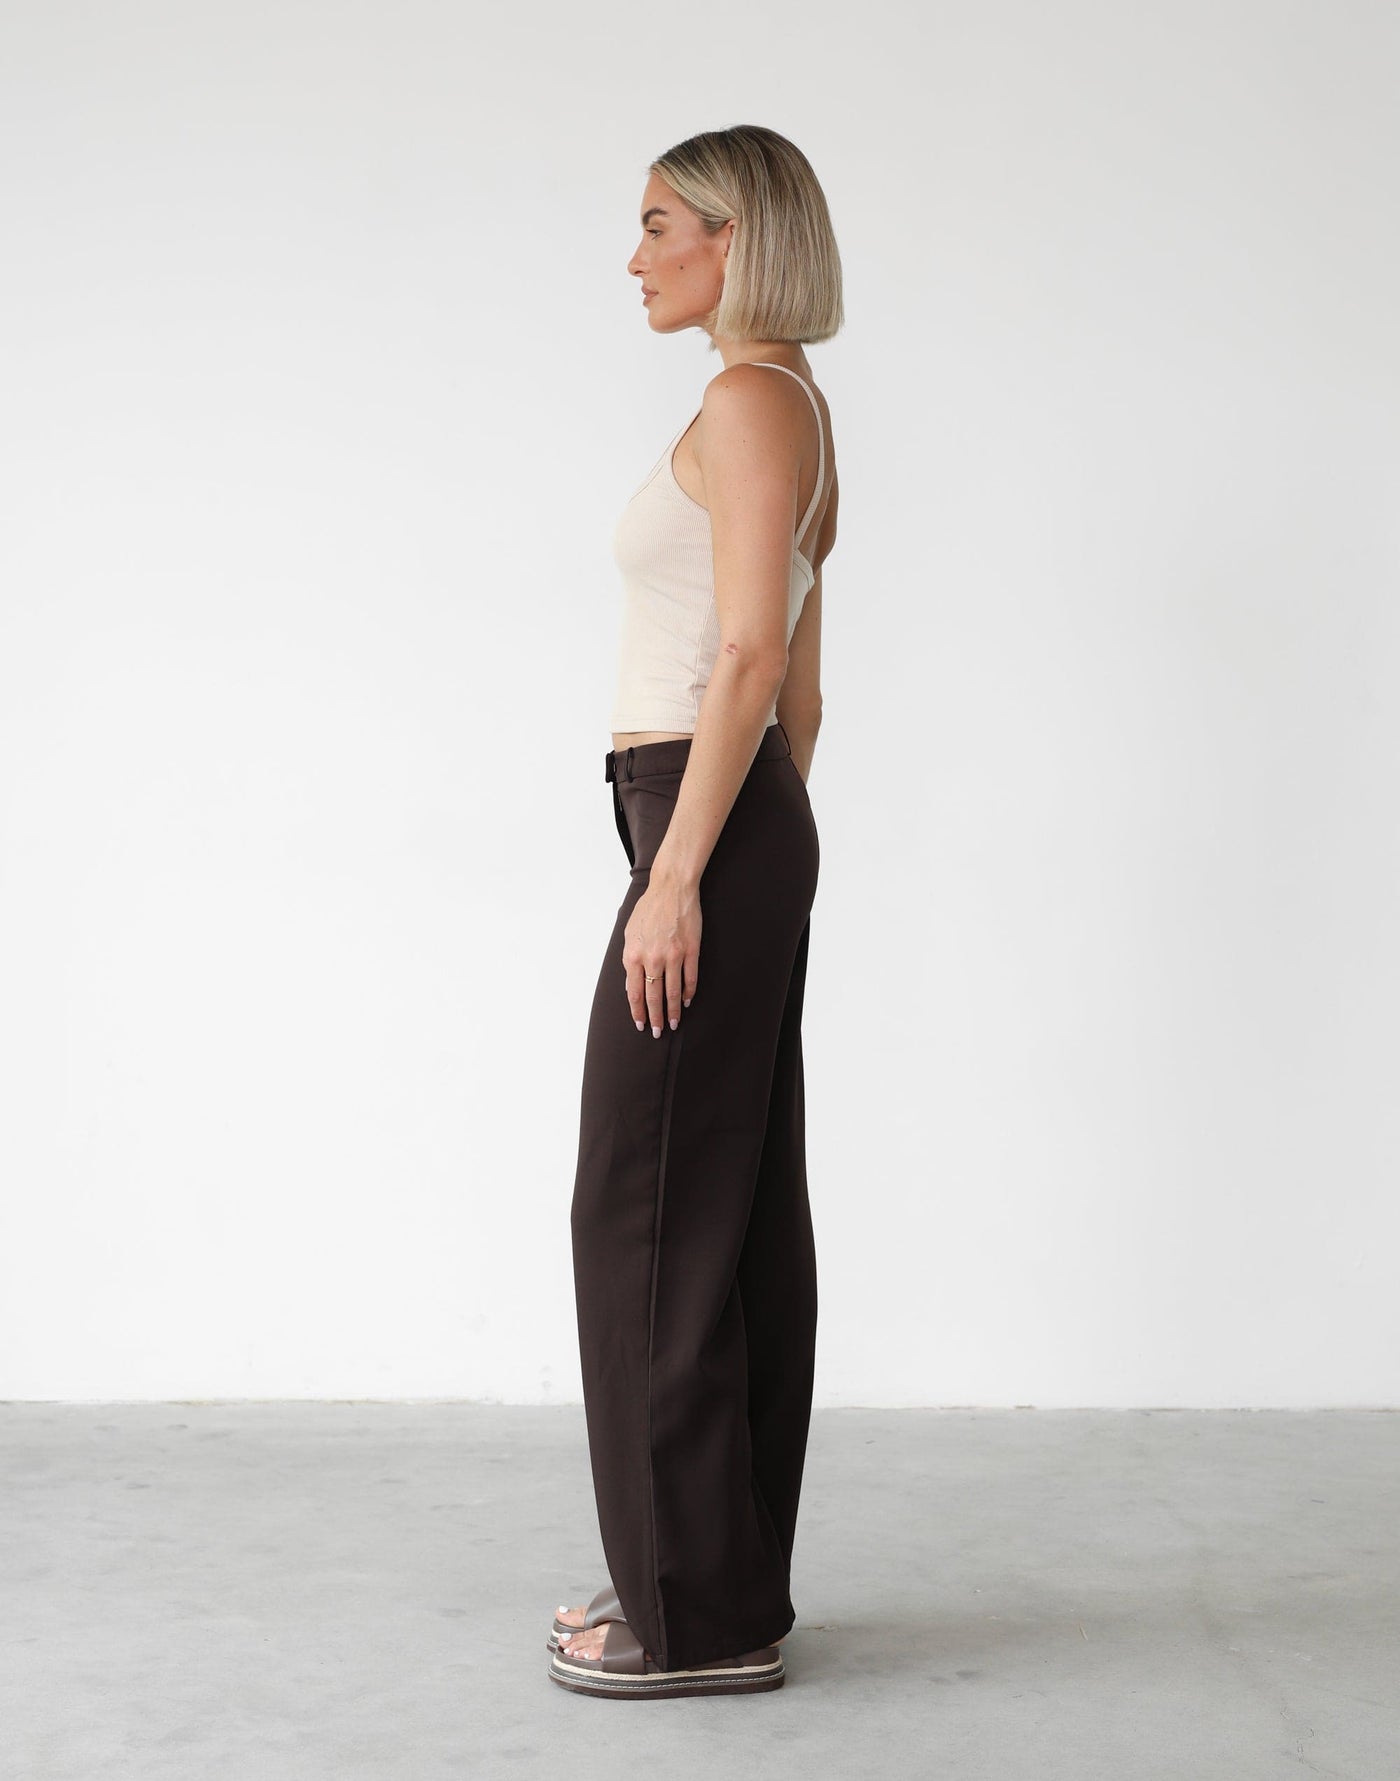 Xali Pants (Brown) - Low Rise Pants - Women's Pants - Charcoal Clothing